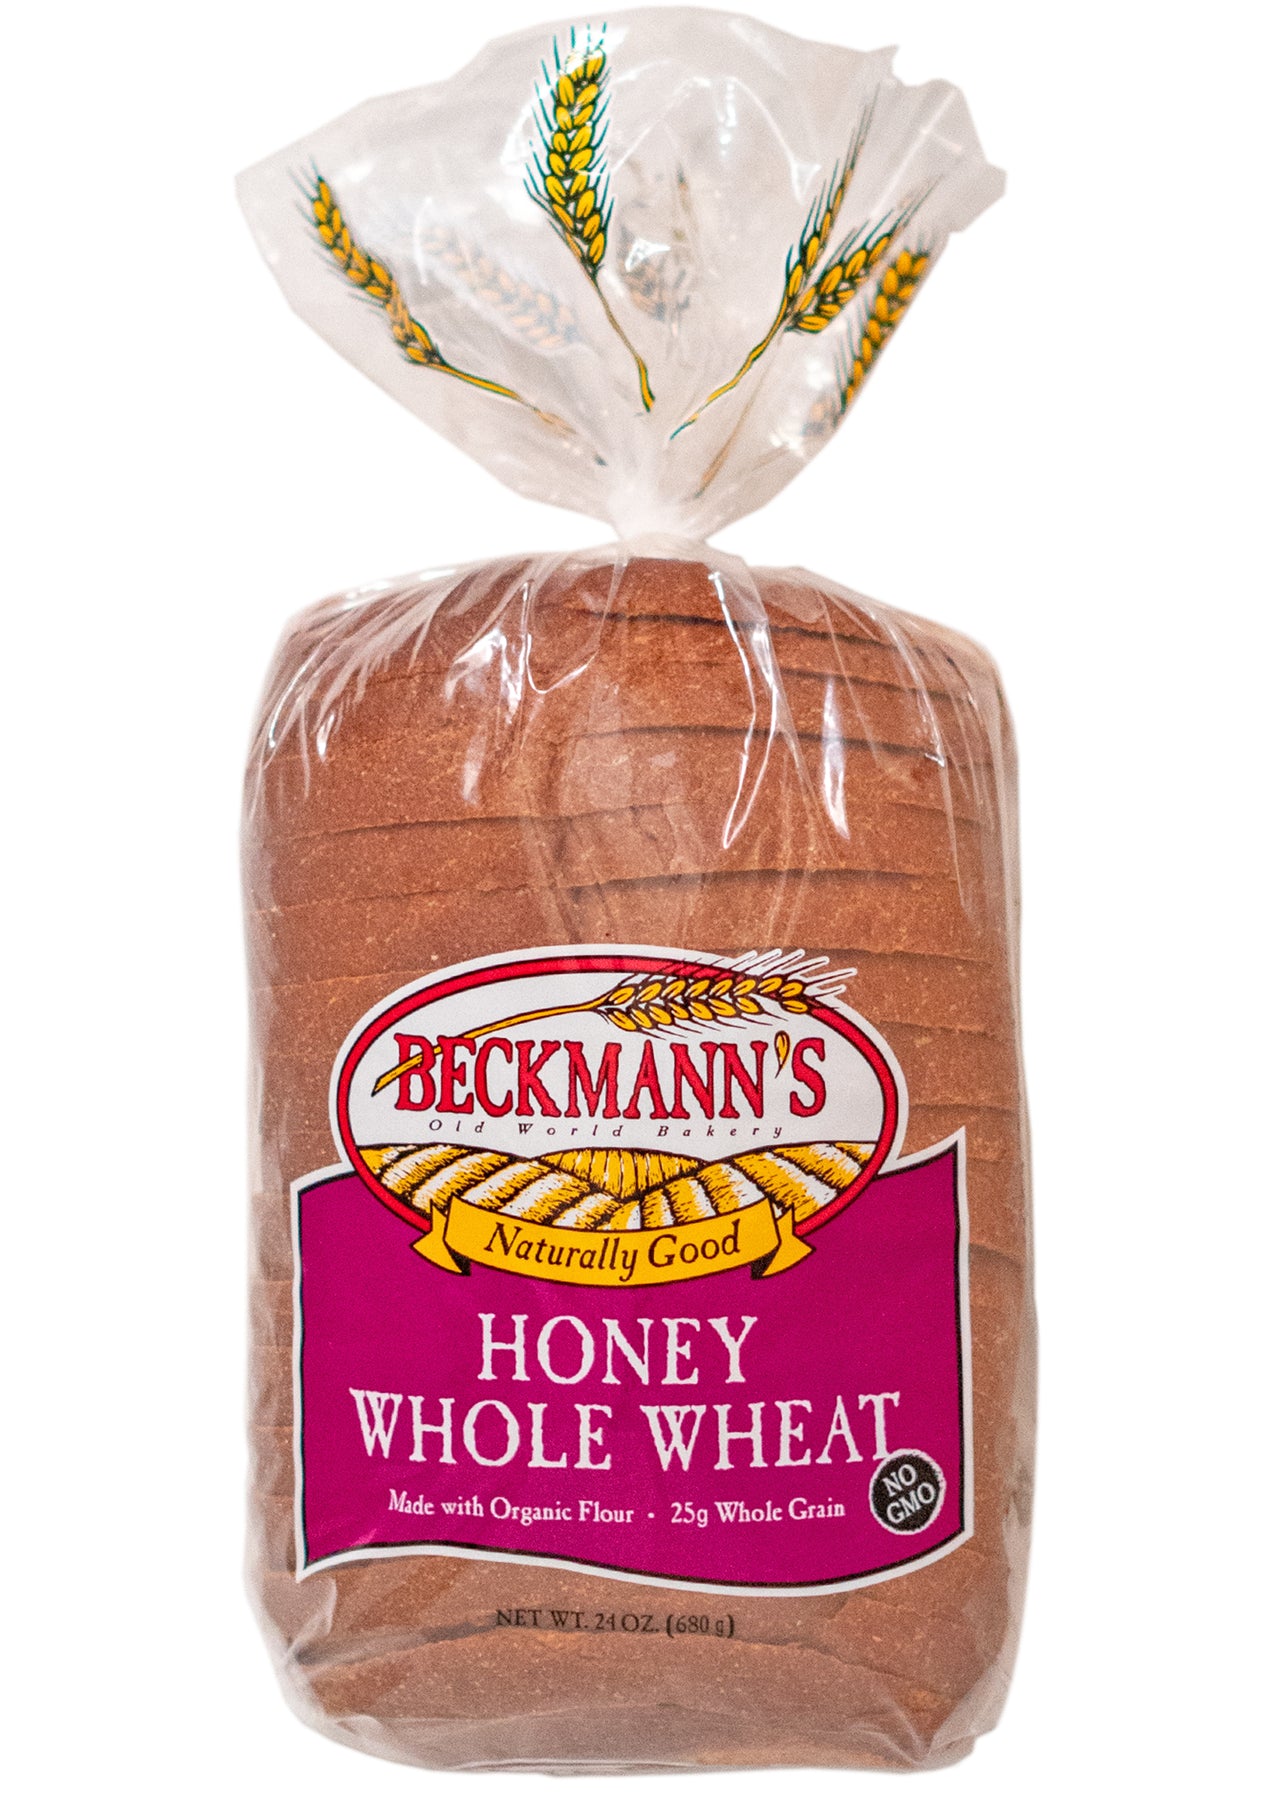 Honey Whole Wheat